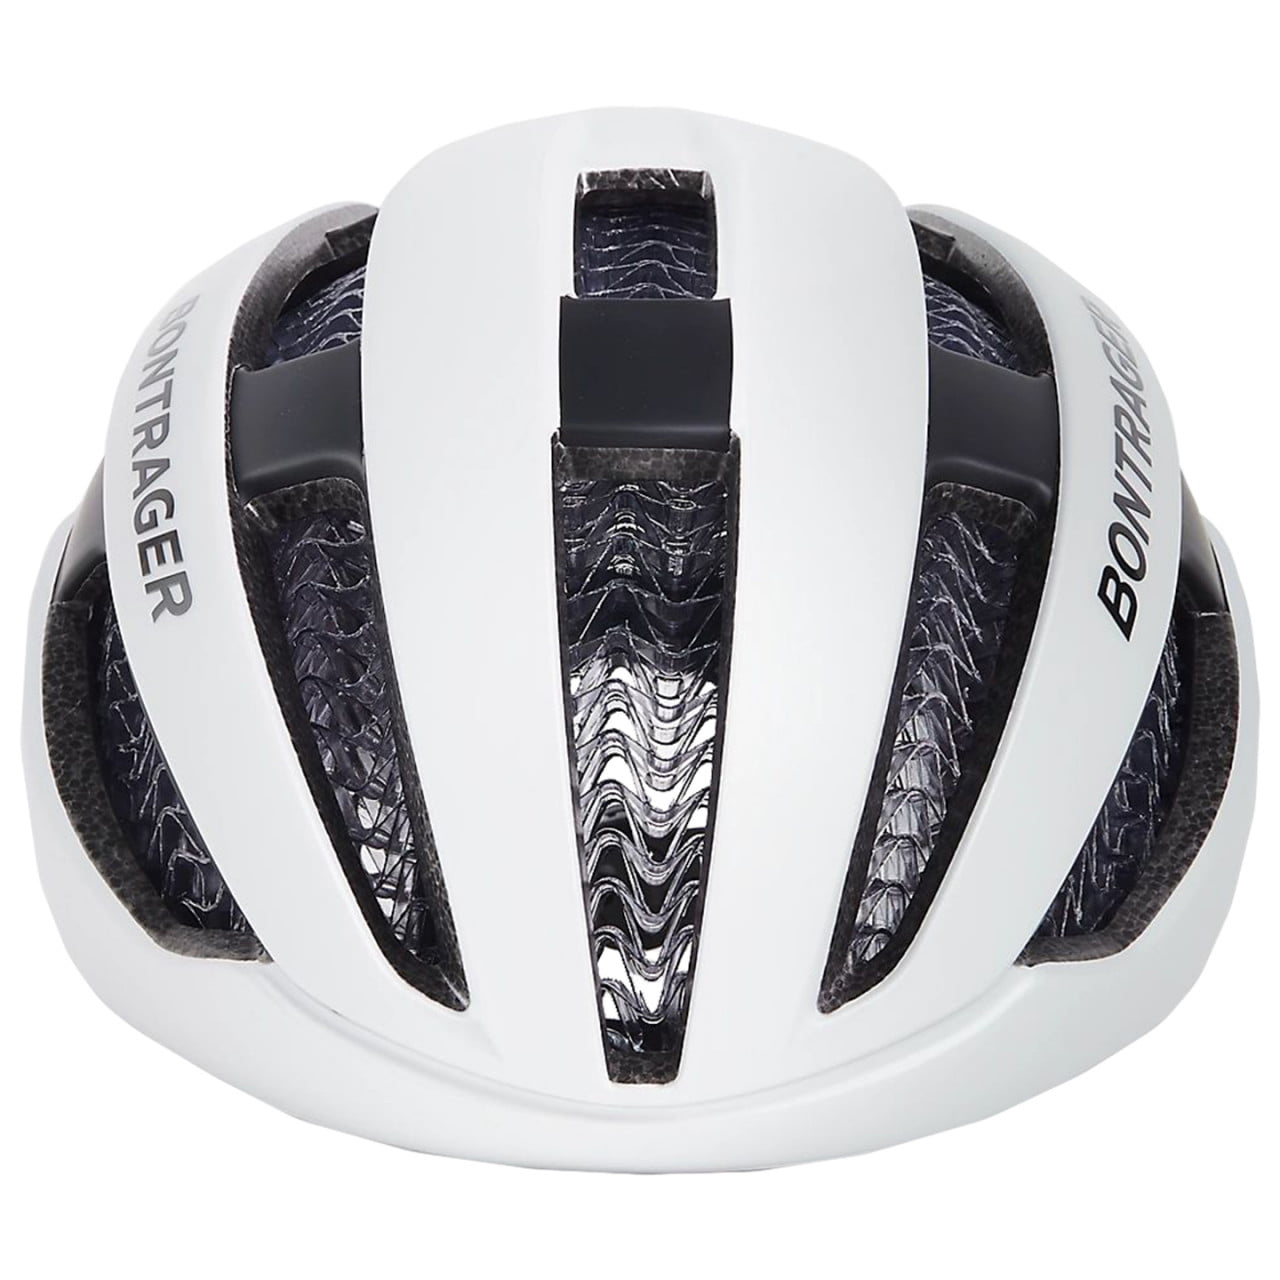 Circuit WaveCel Cycling Helmet